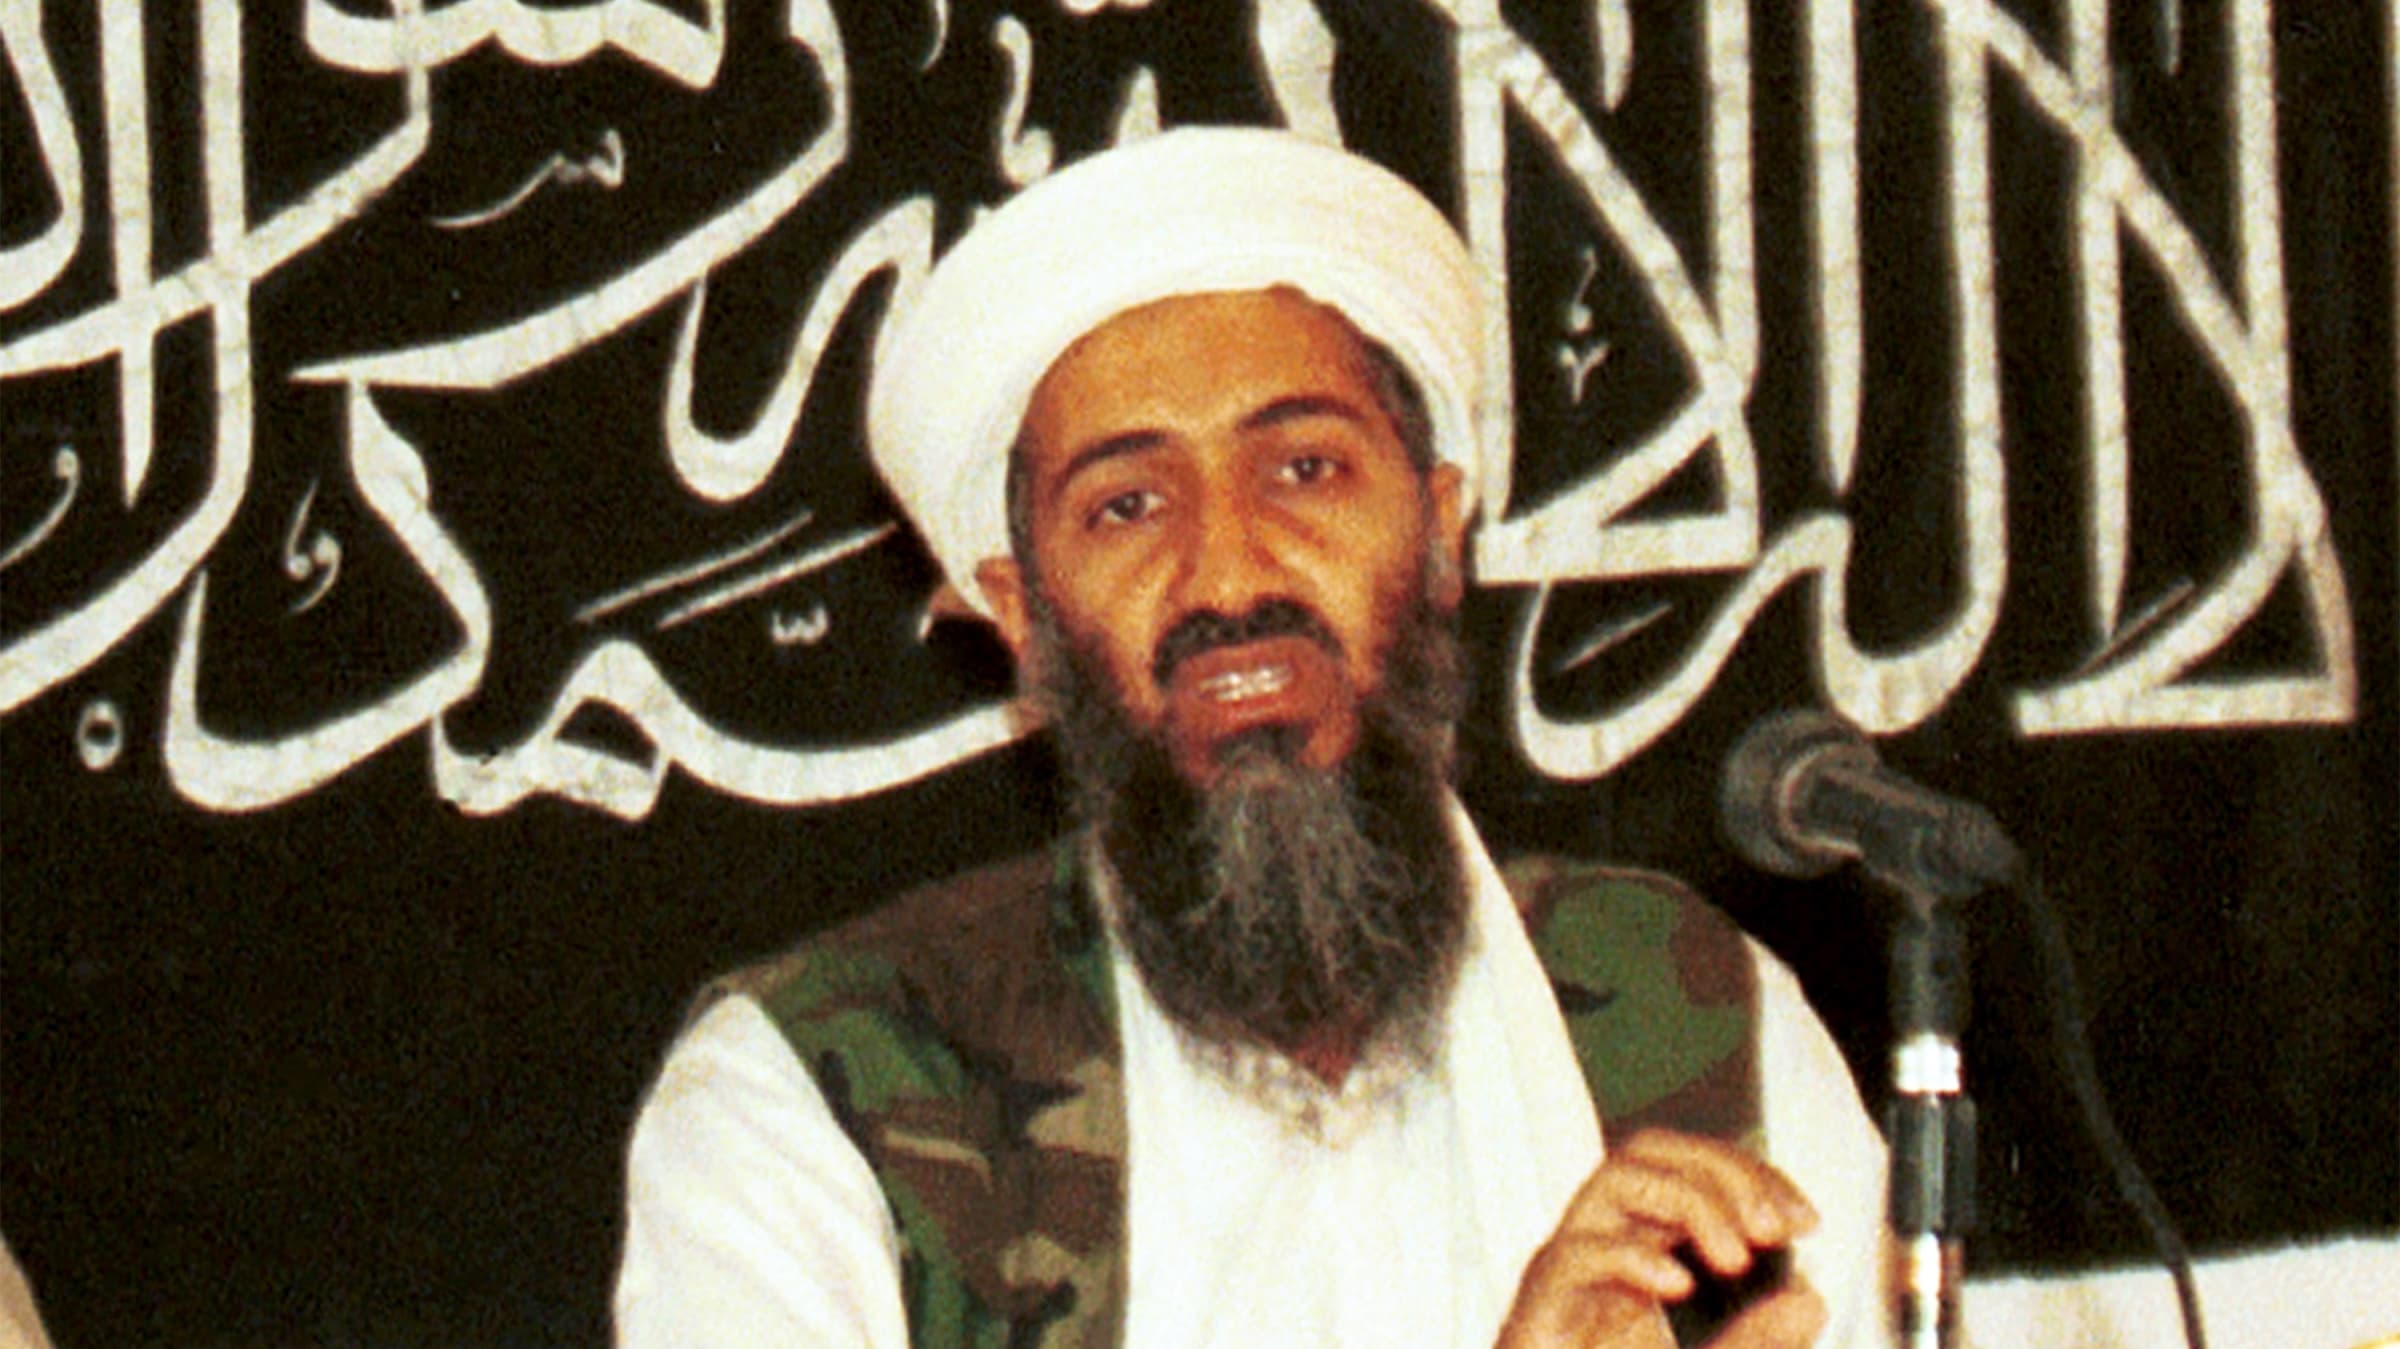 Laden Xxx Video - Was Osama bin Laden Sending Coded Messages in Porn?